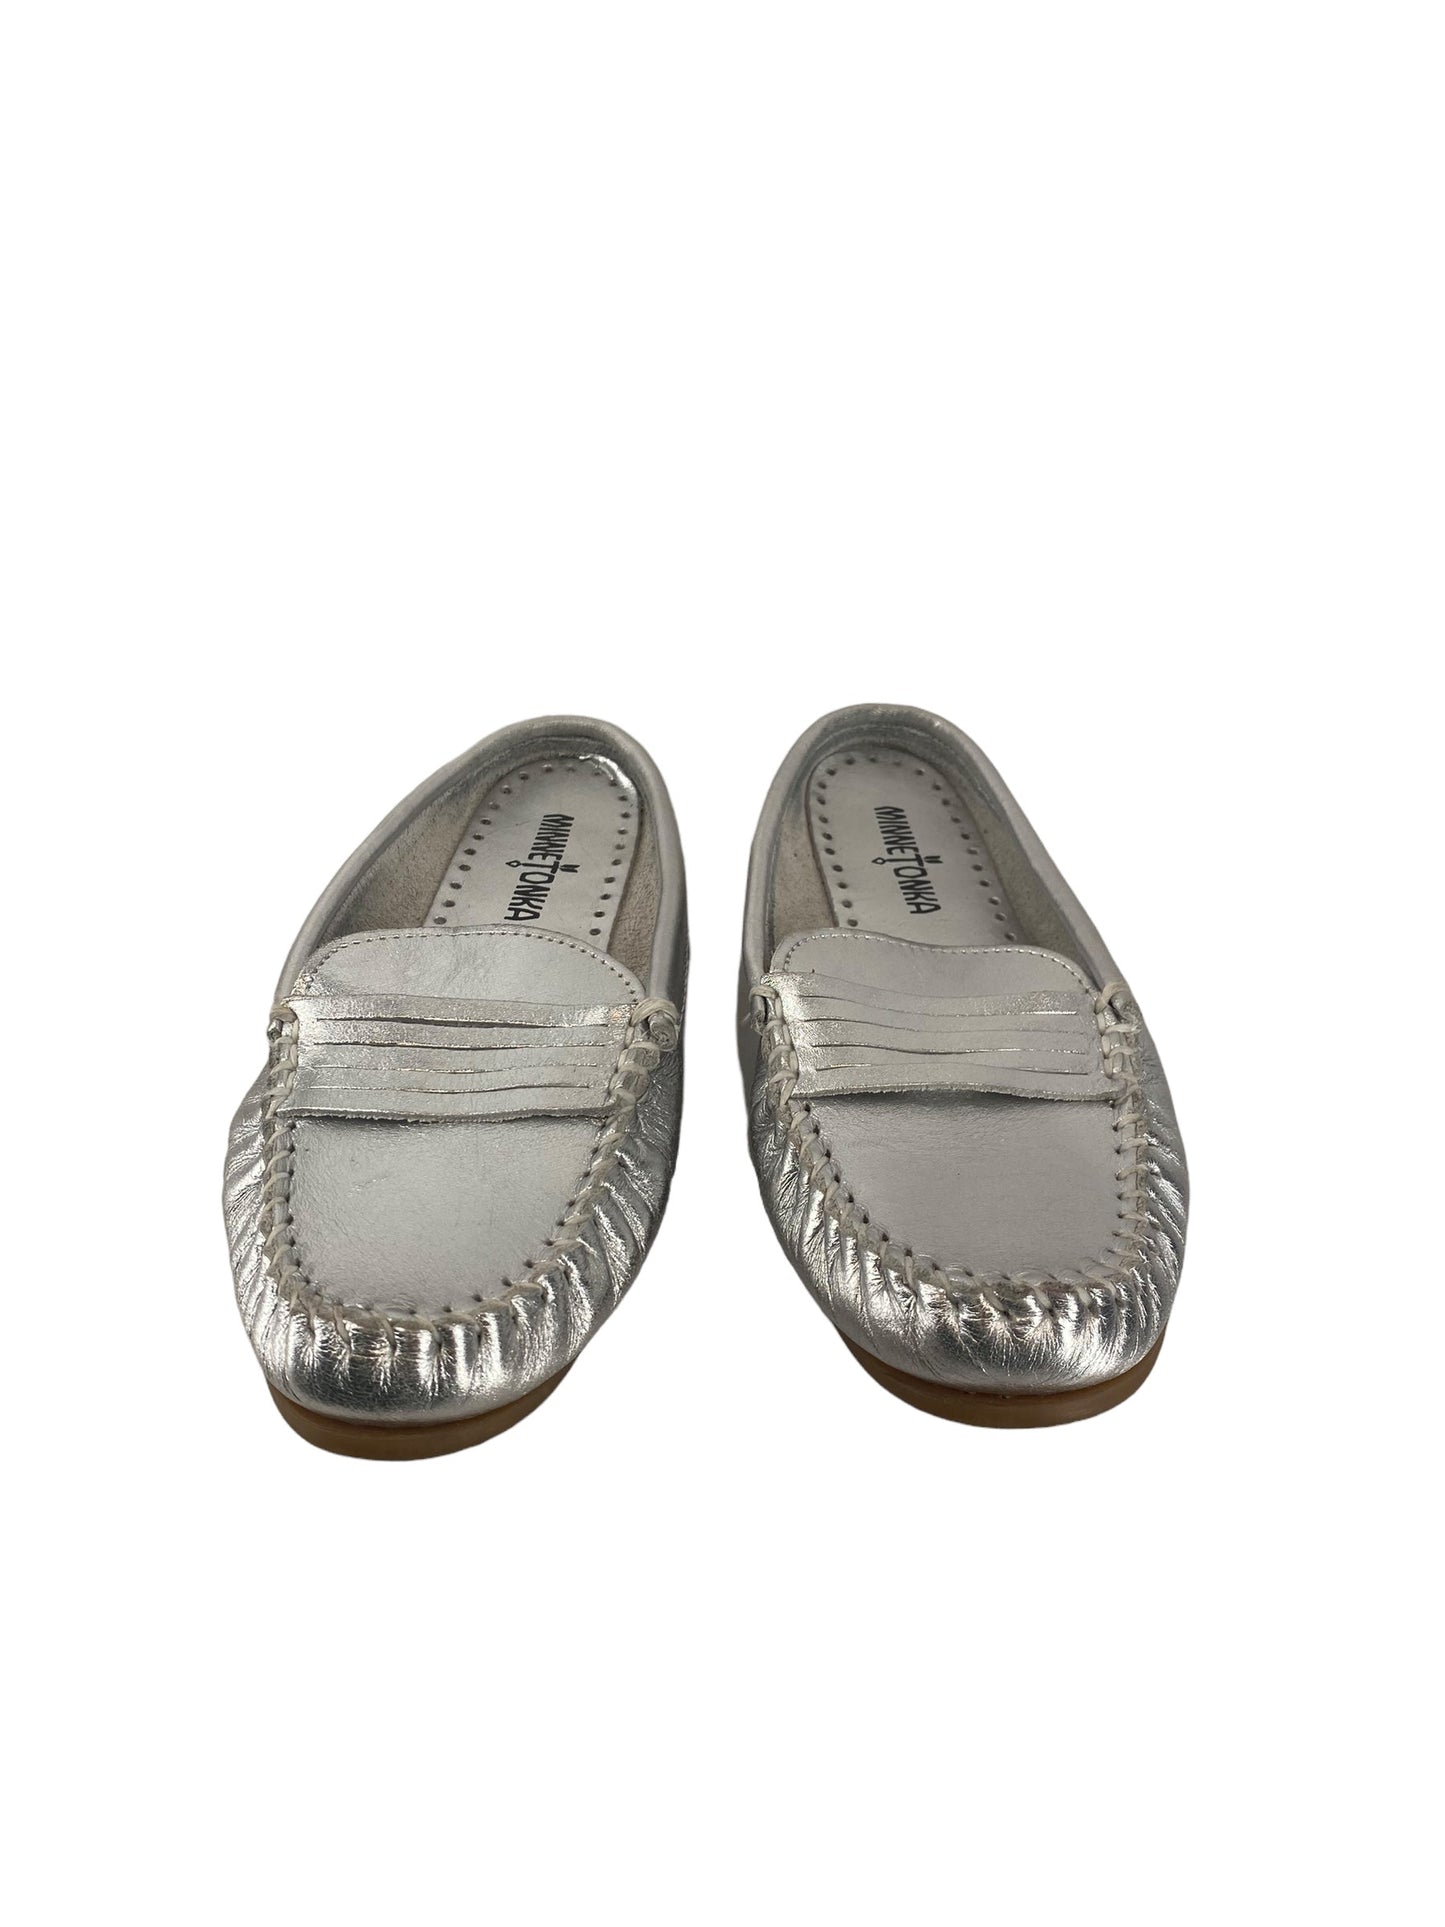 Silver Shoes Flats Minnetonka, Size 9